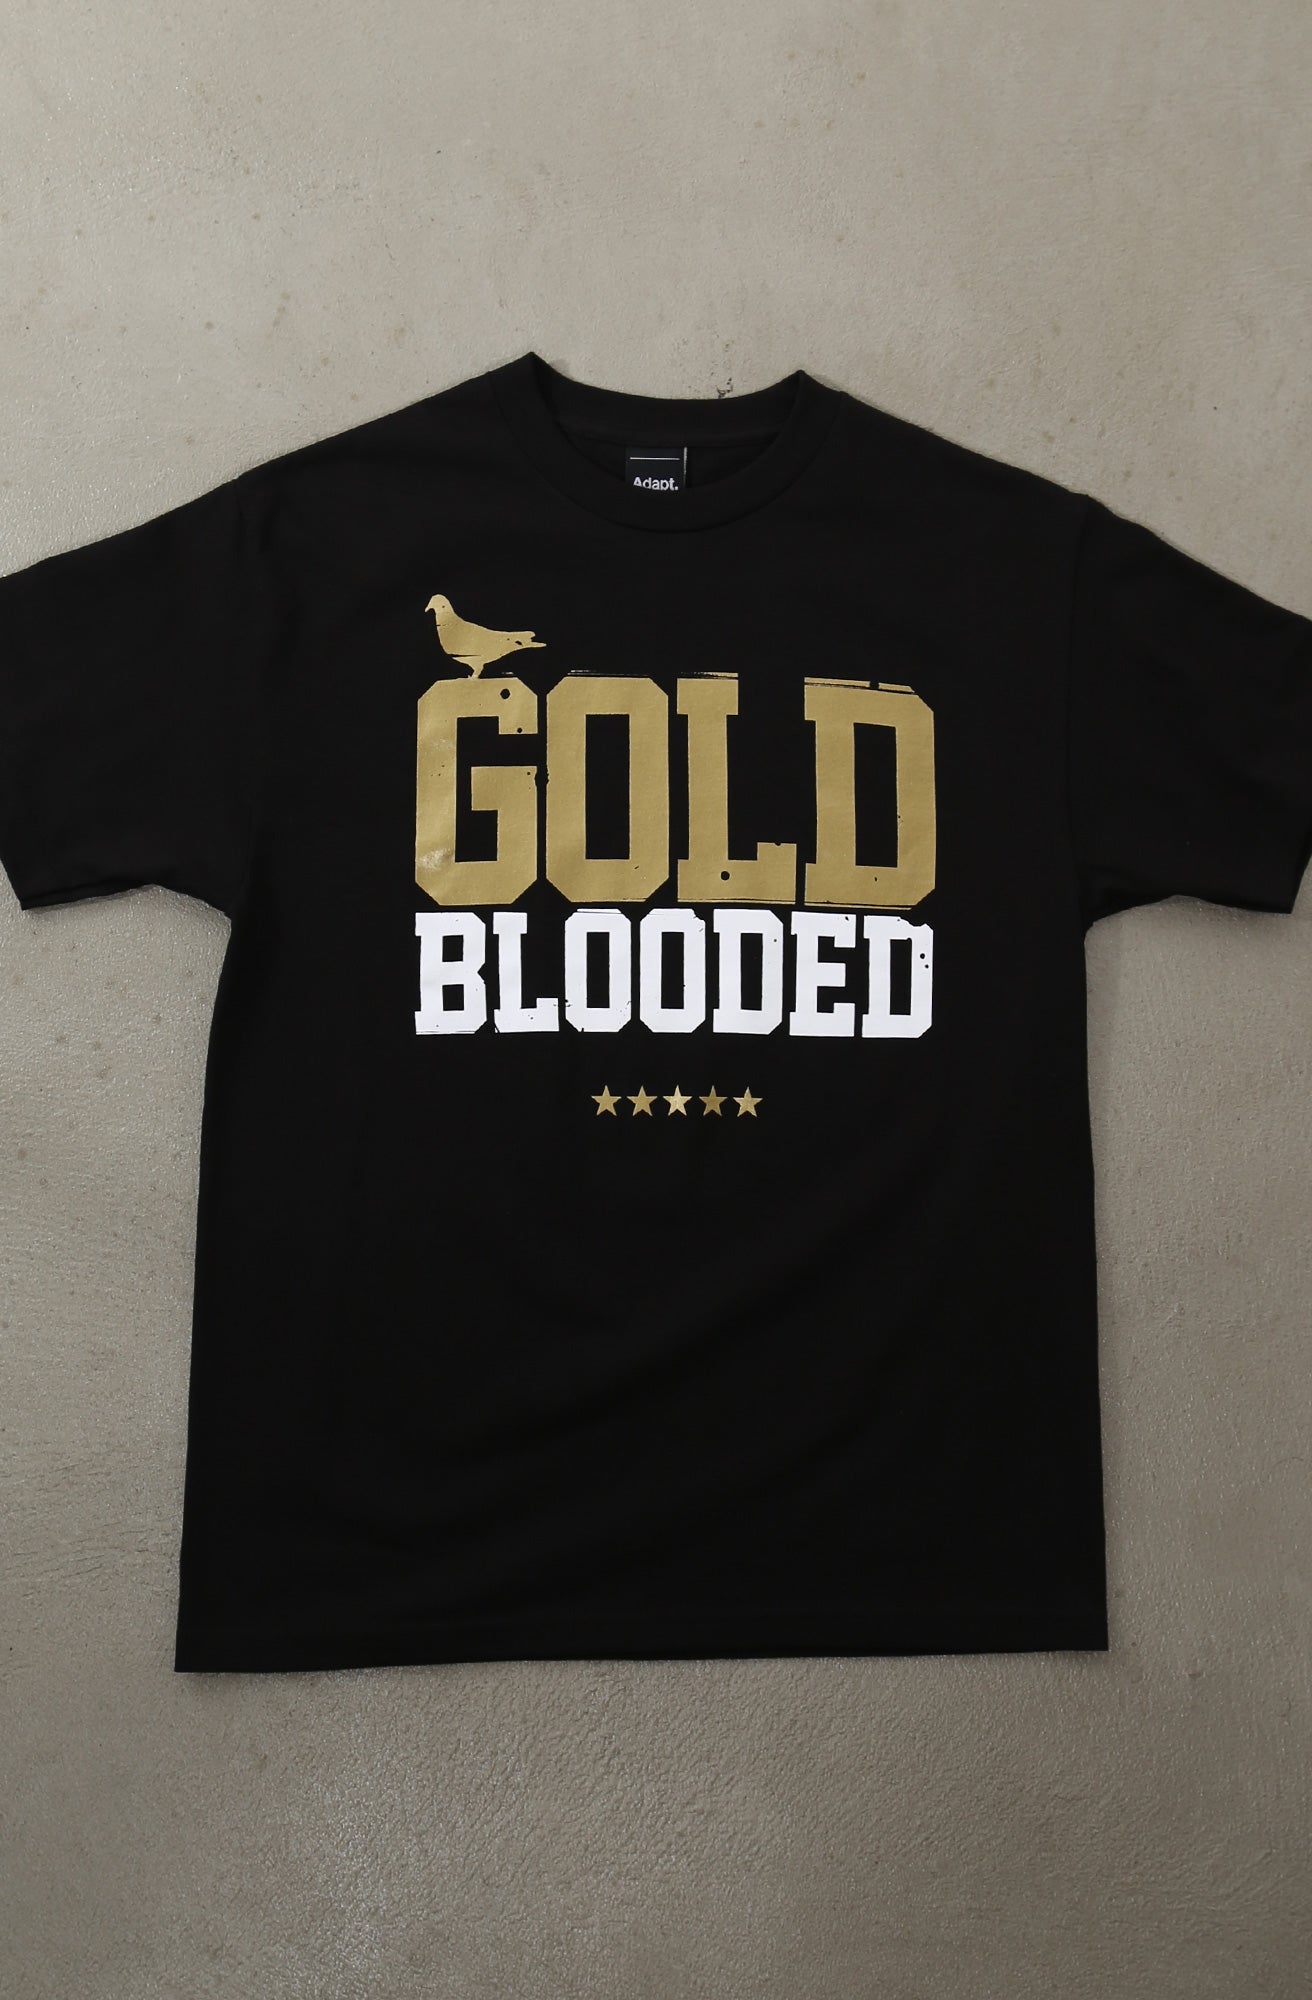 Gold Blooded (Men's Black/White/Gold Tee)